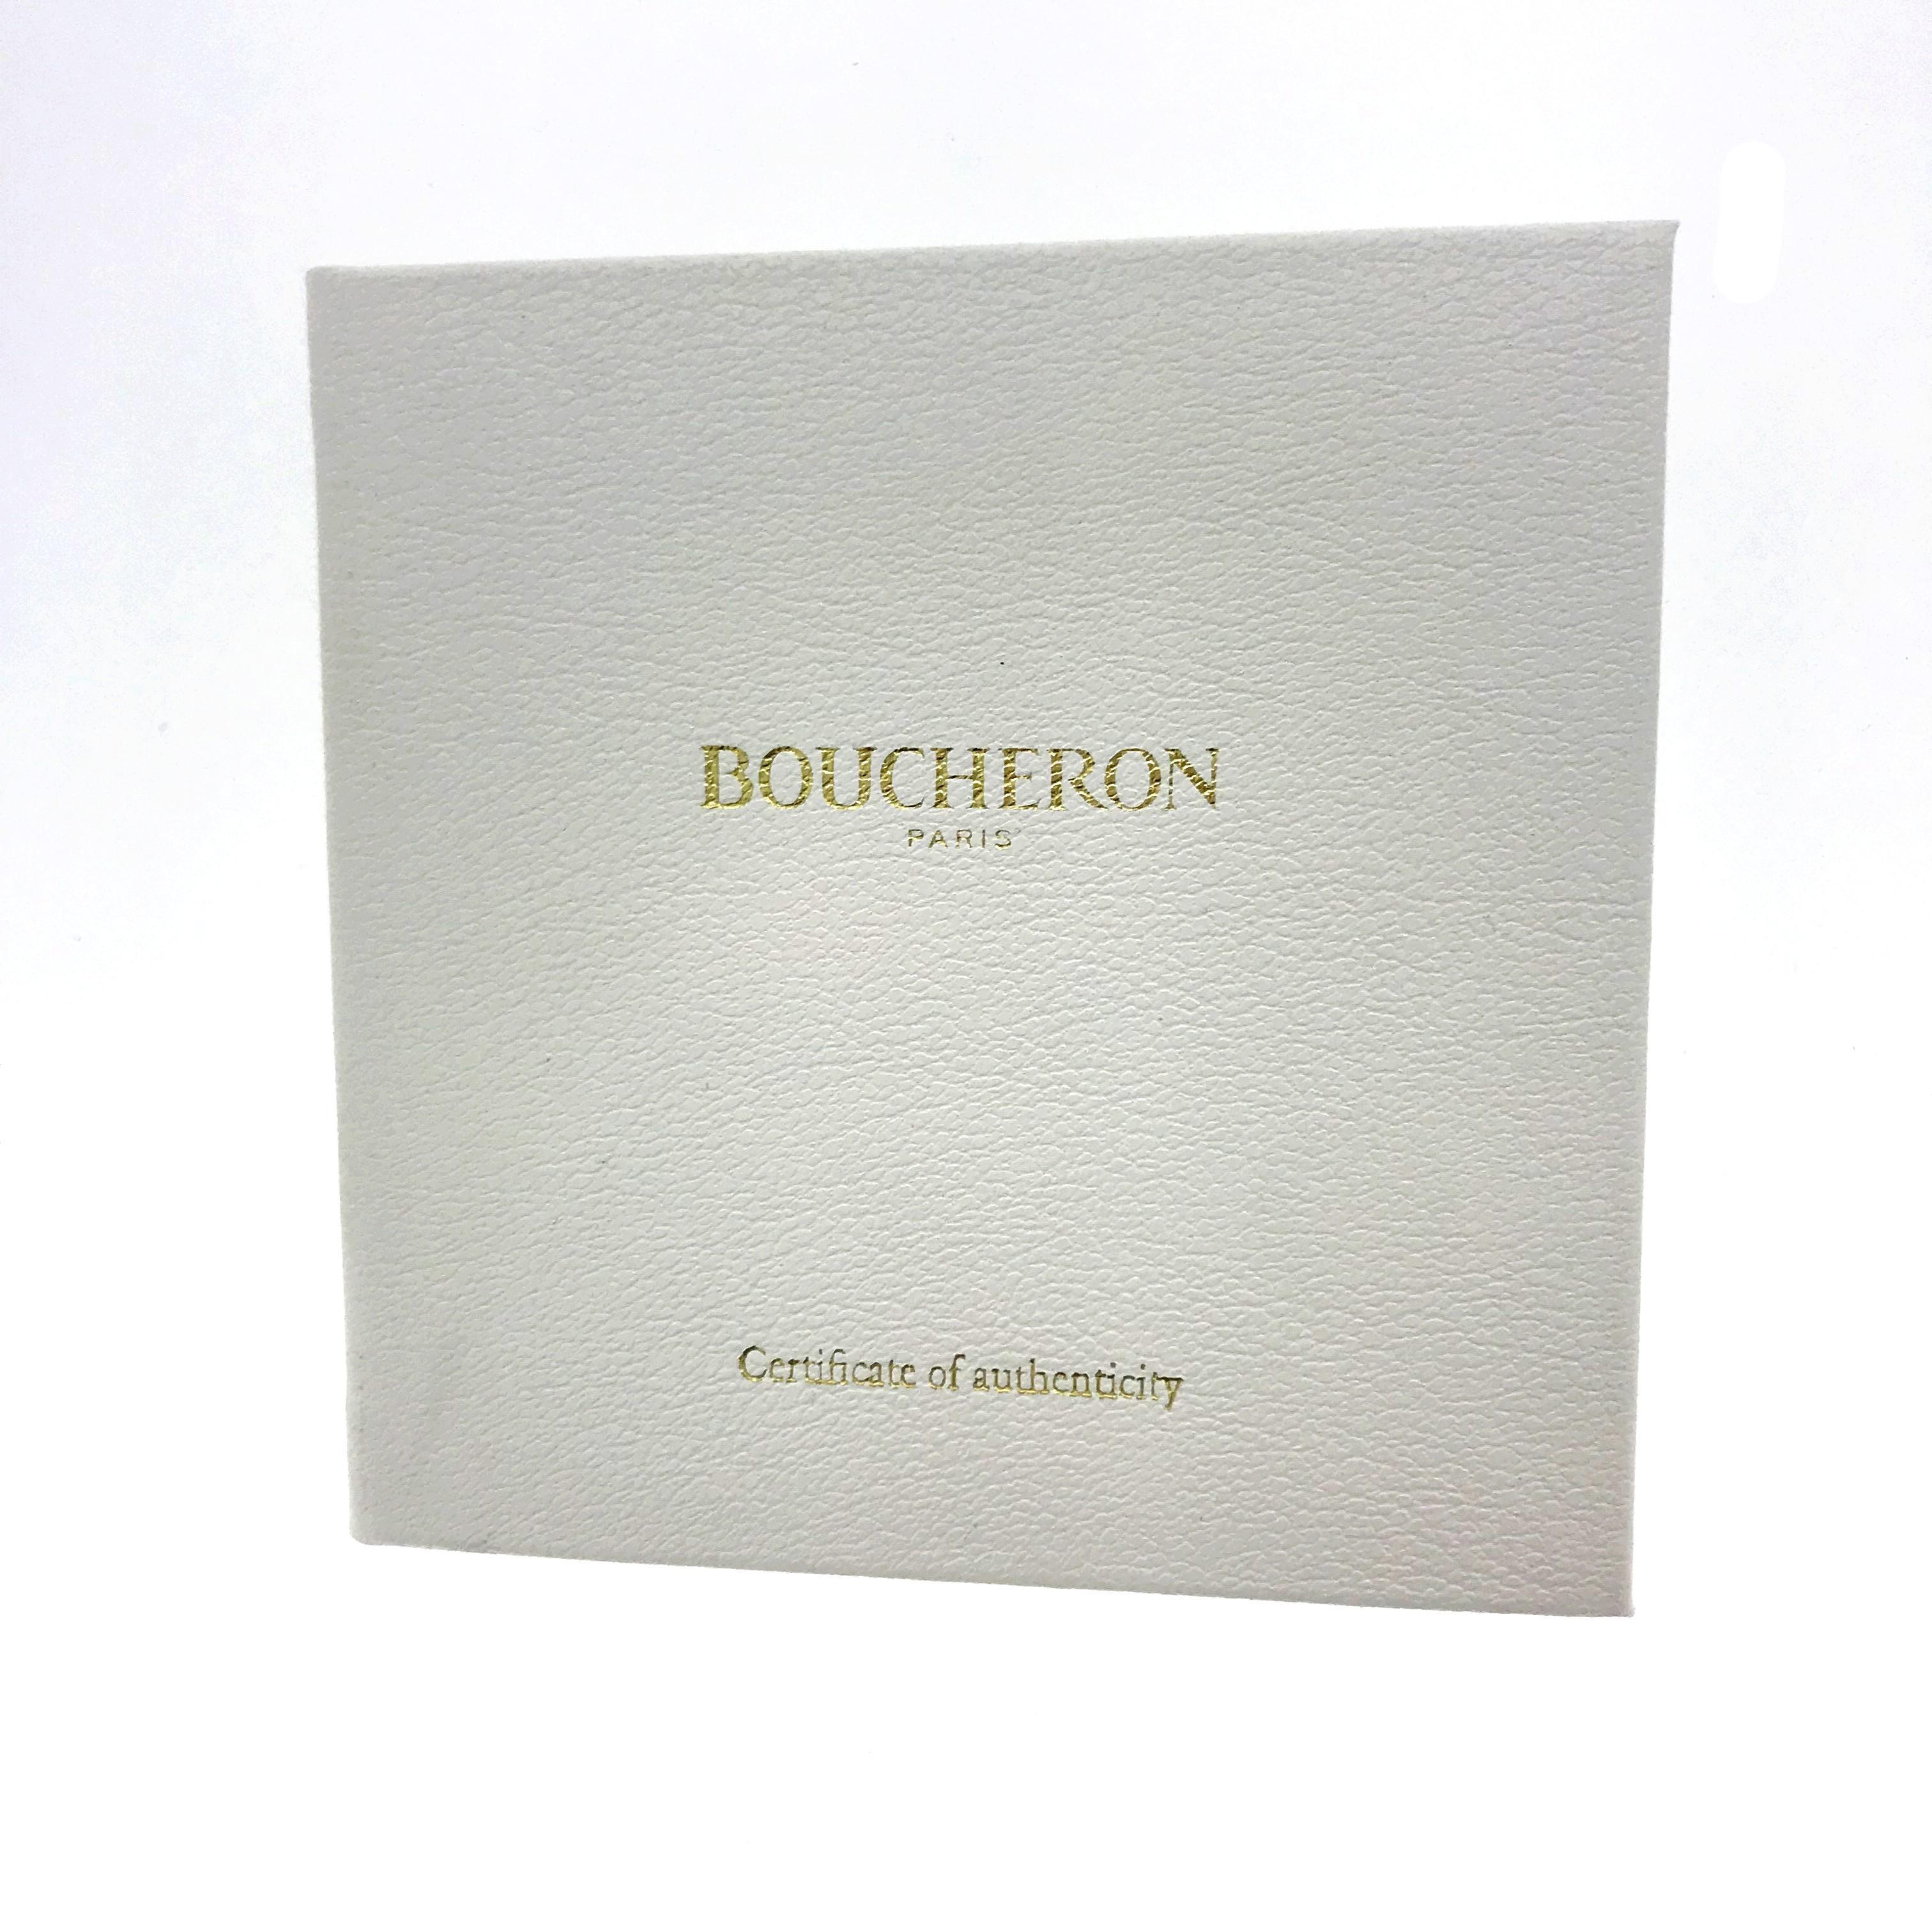 Boucheron Quatre Black Edition White Gold Black PVD Large Ring 2